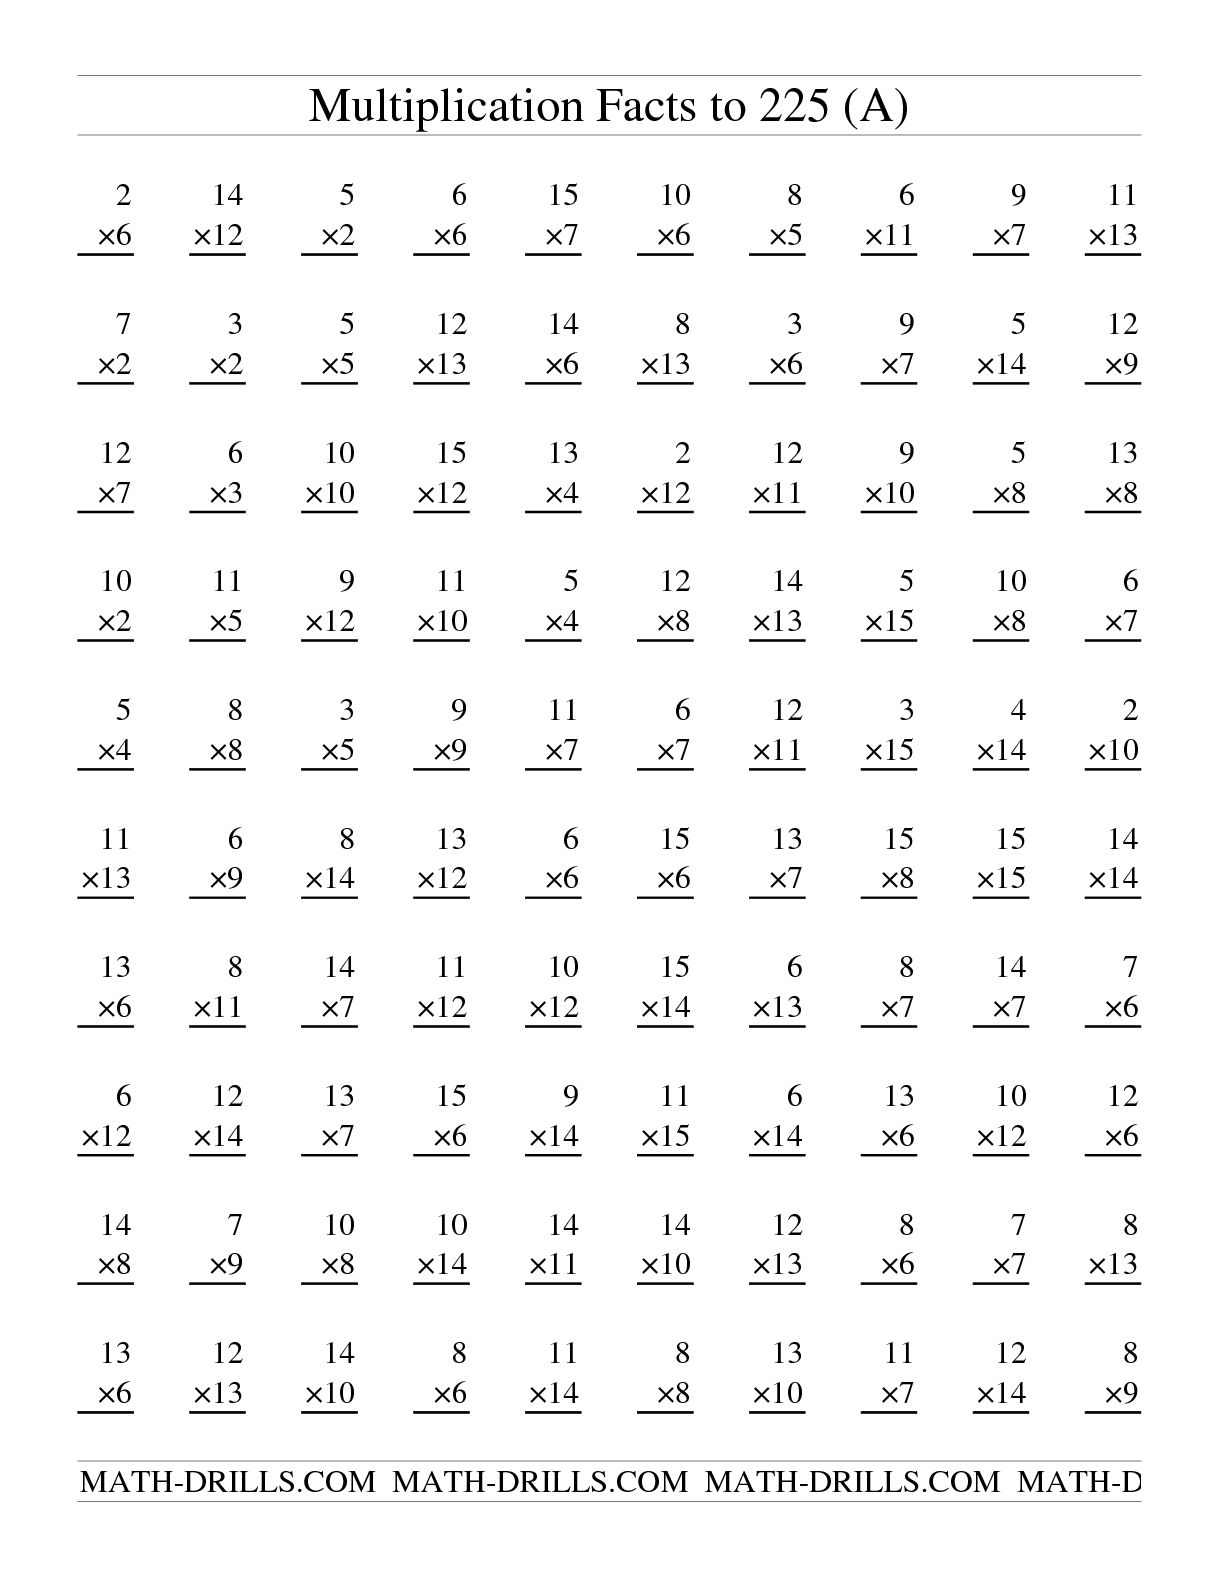 Math Fact Worksheets Multiplication Printable